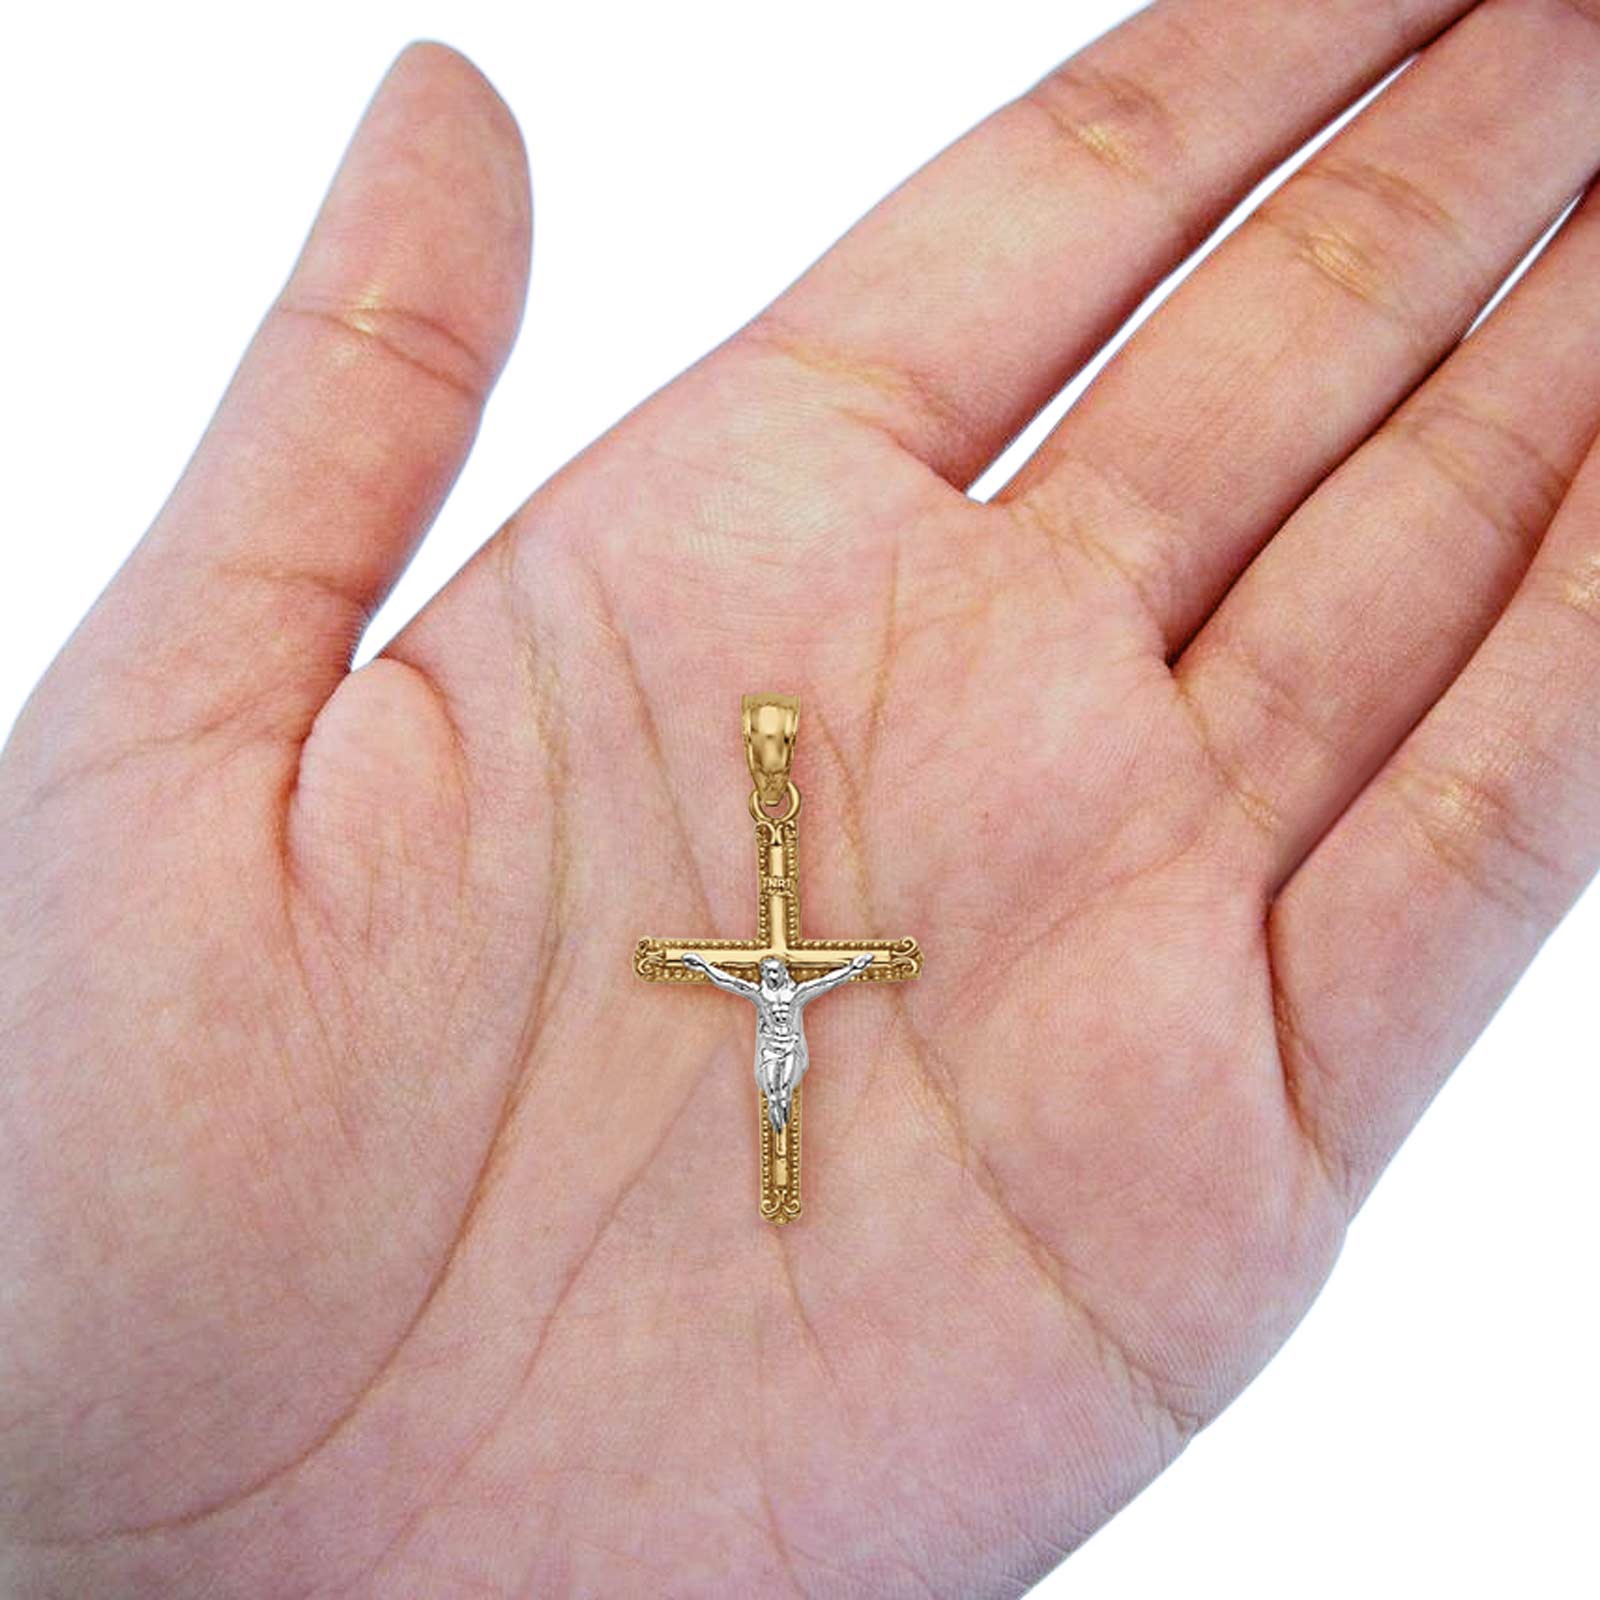 14K Two Tone Gold Jesus Crucifix INRI Cross Religious Charm Pendant 0.8gm